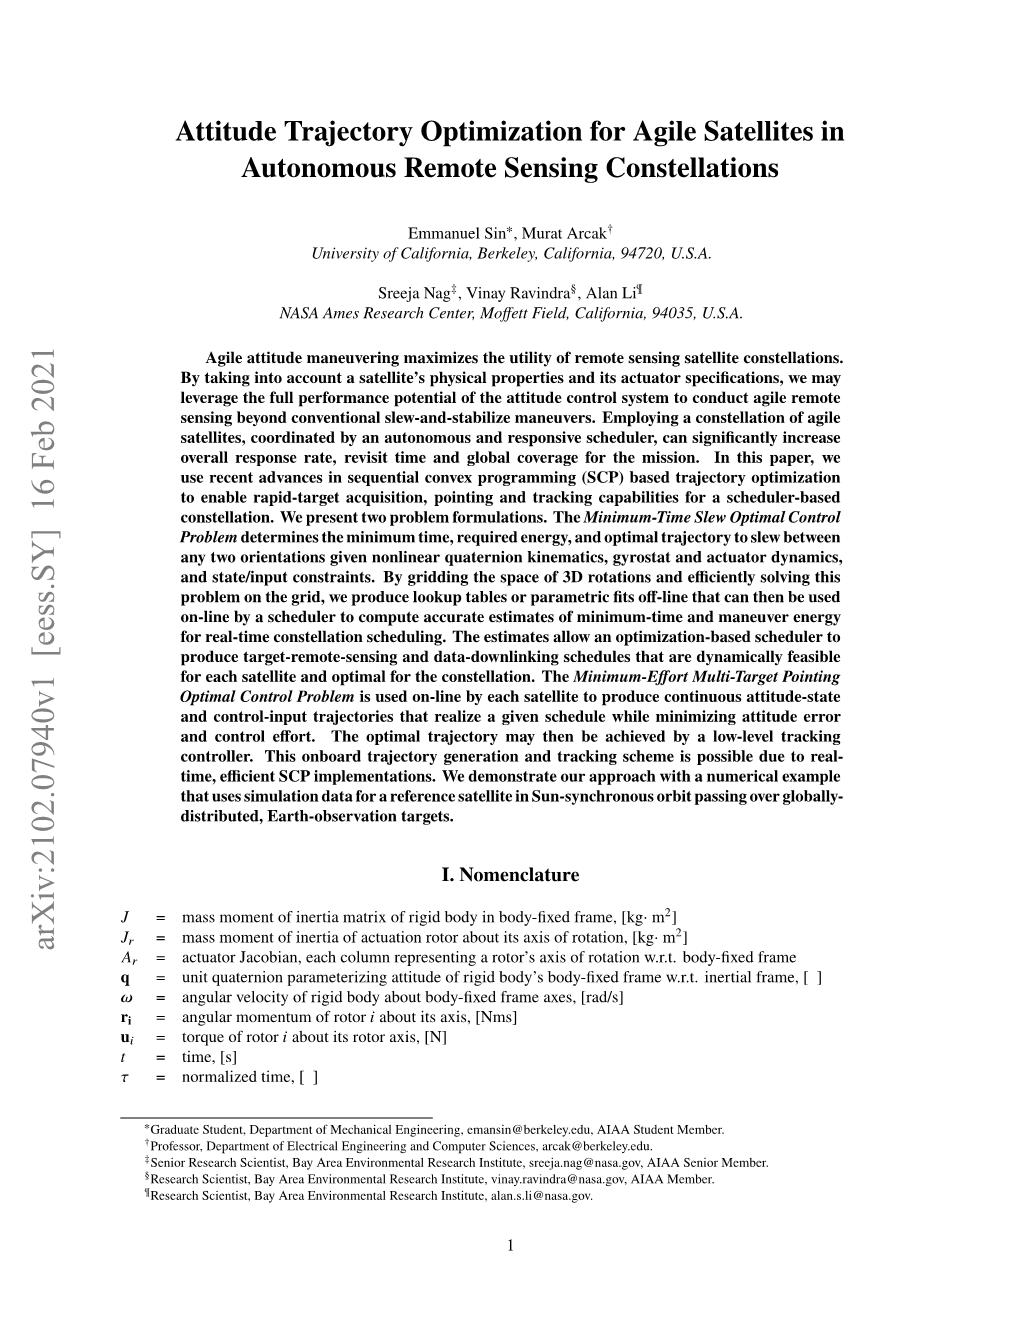 Attitude Trajectory Optimization for Agile Satellites in Autonomous Remote Sensing Constellations